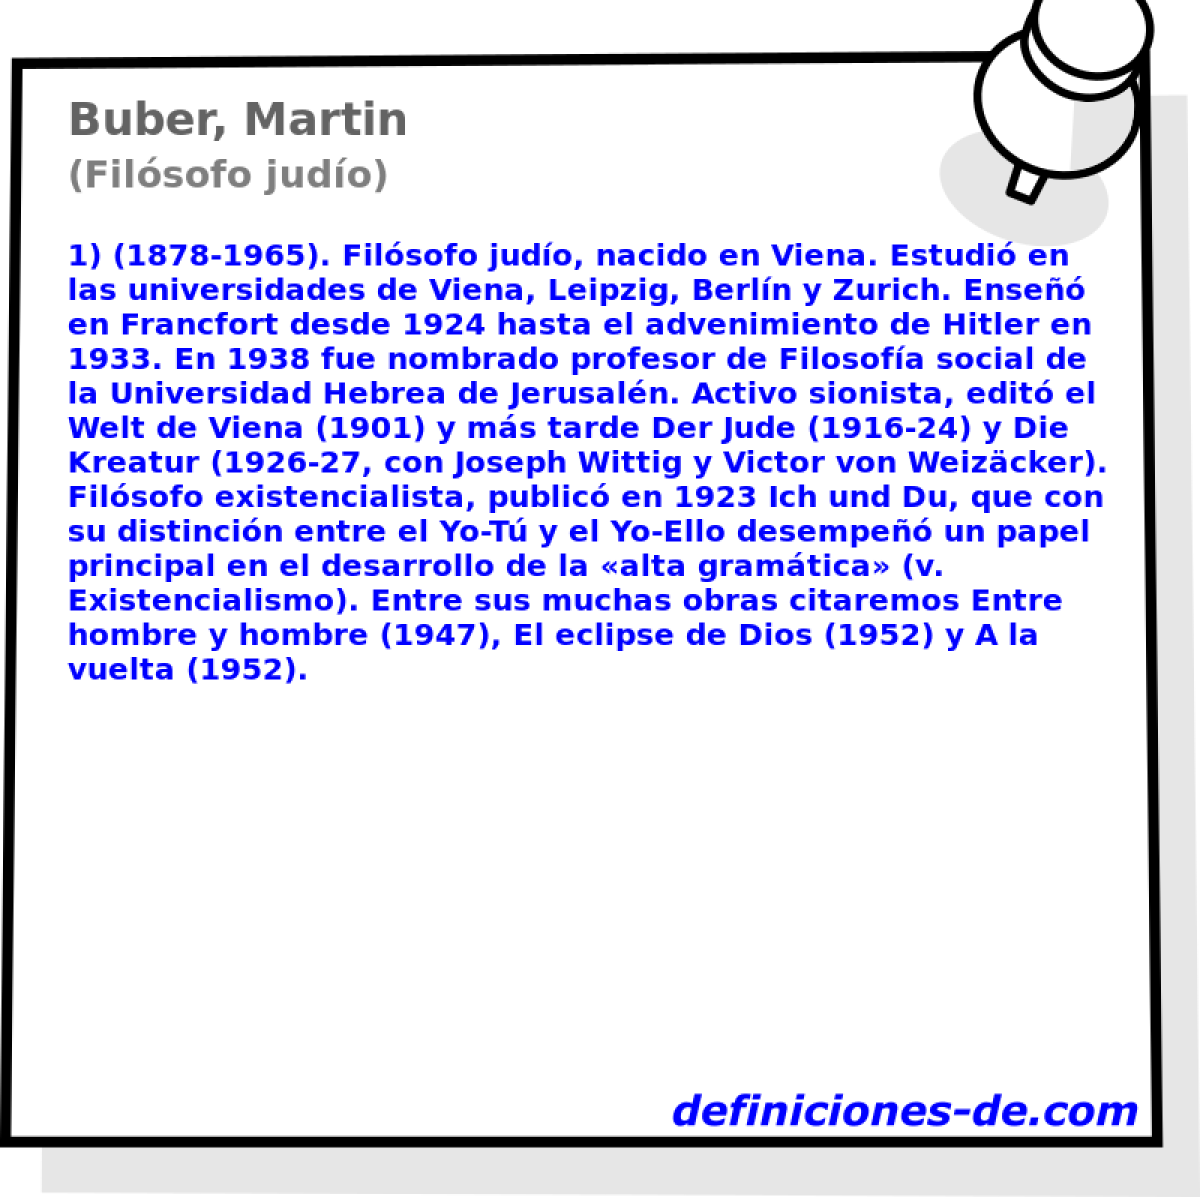 Buber, Martin (Filsofo judo)